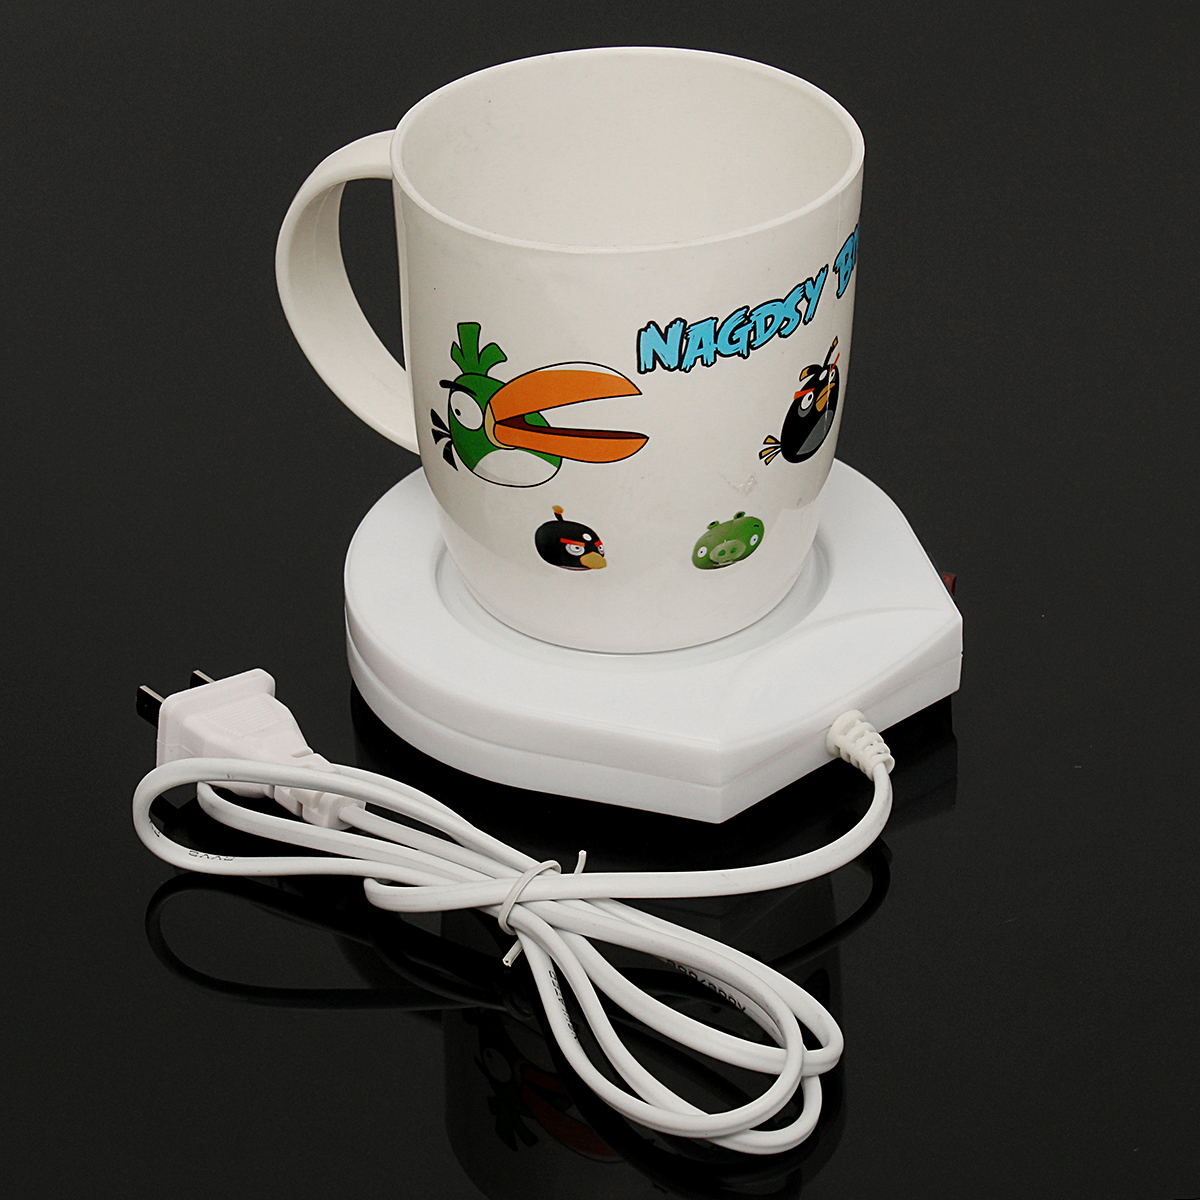 220v White Electric Powered Cup Warmer Heater Pad Coffee Tea Milk Mug US Plug 82